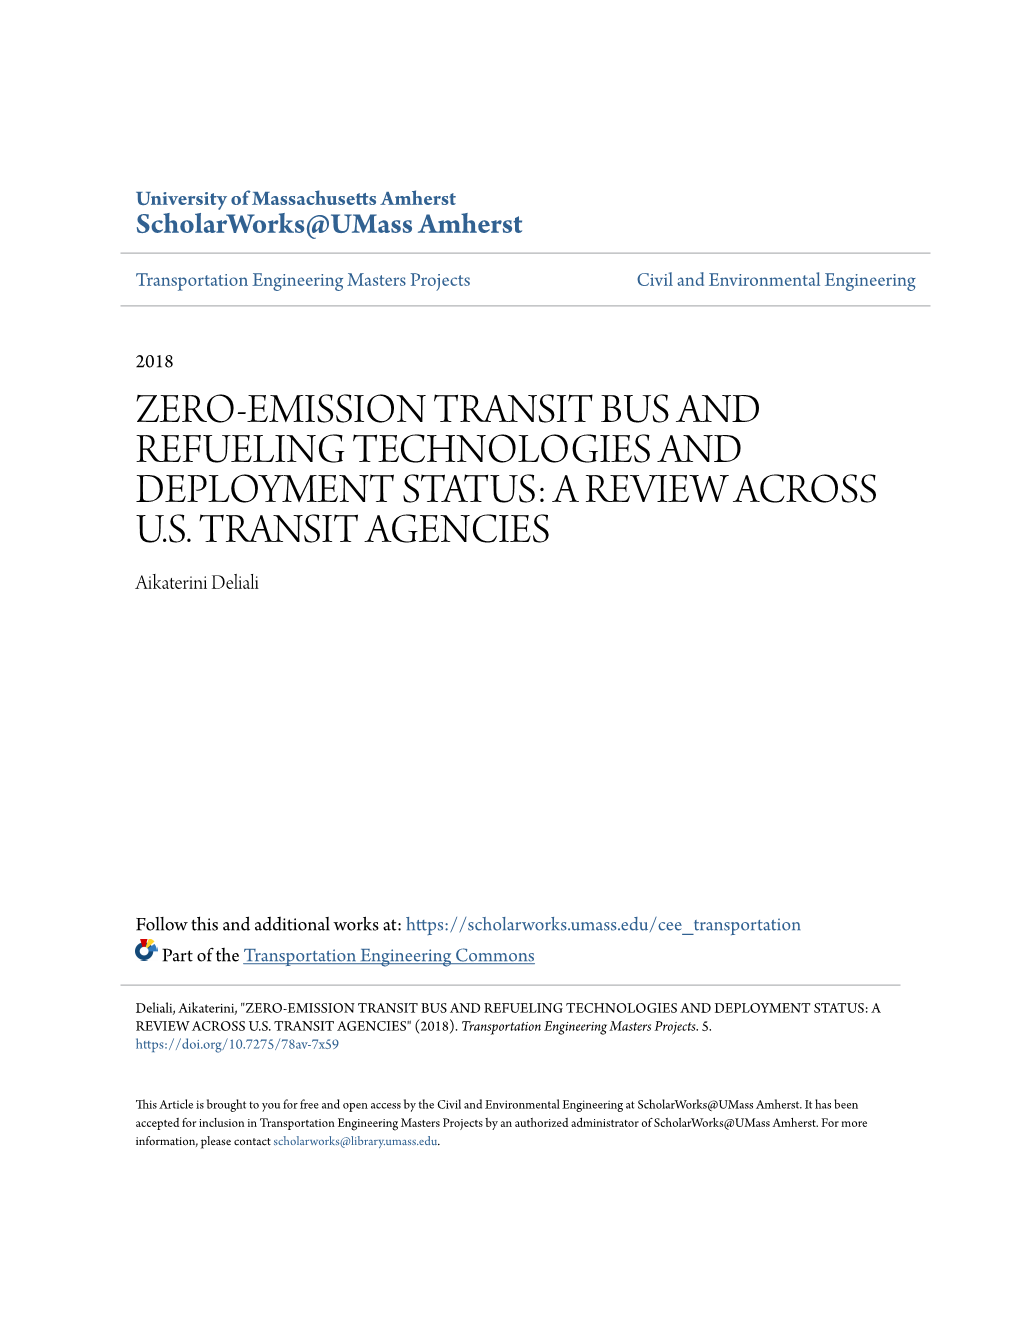 A Review Across Us Transit Agencies